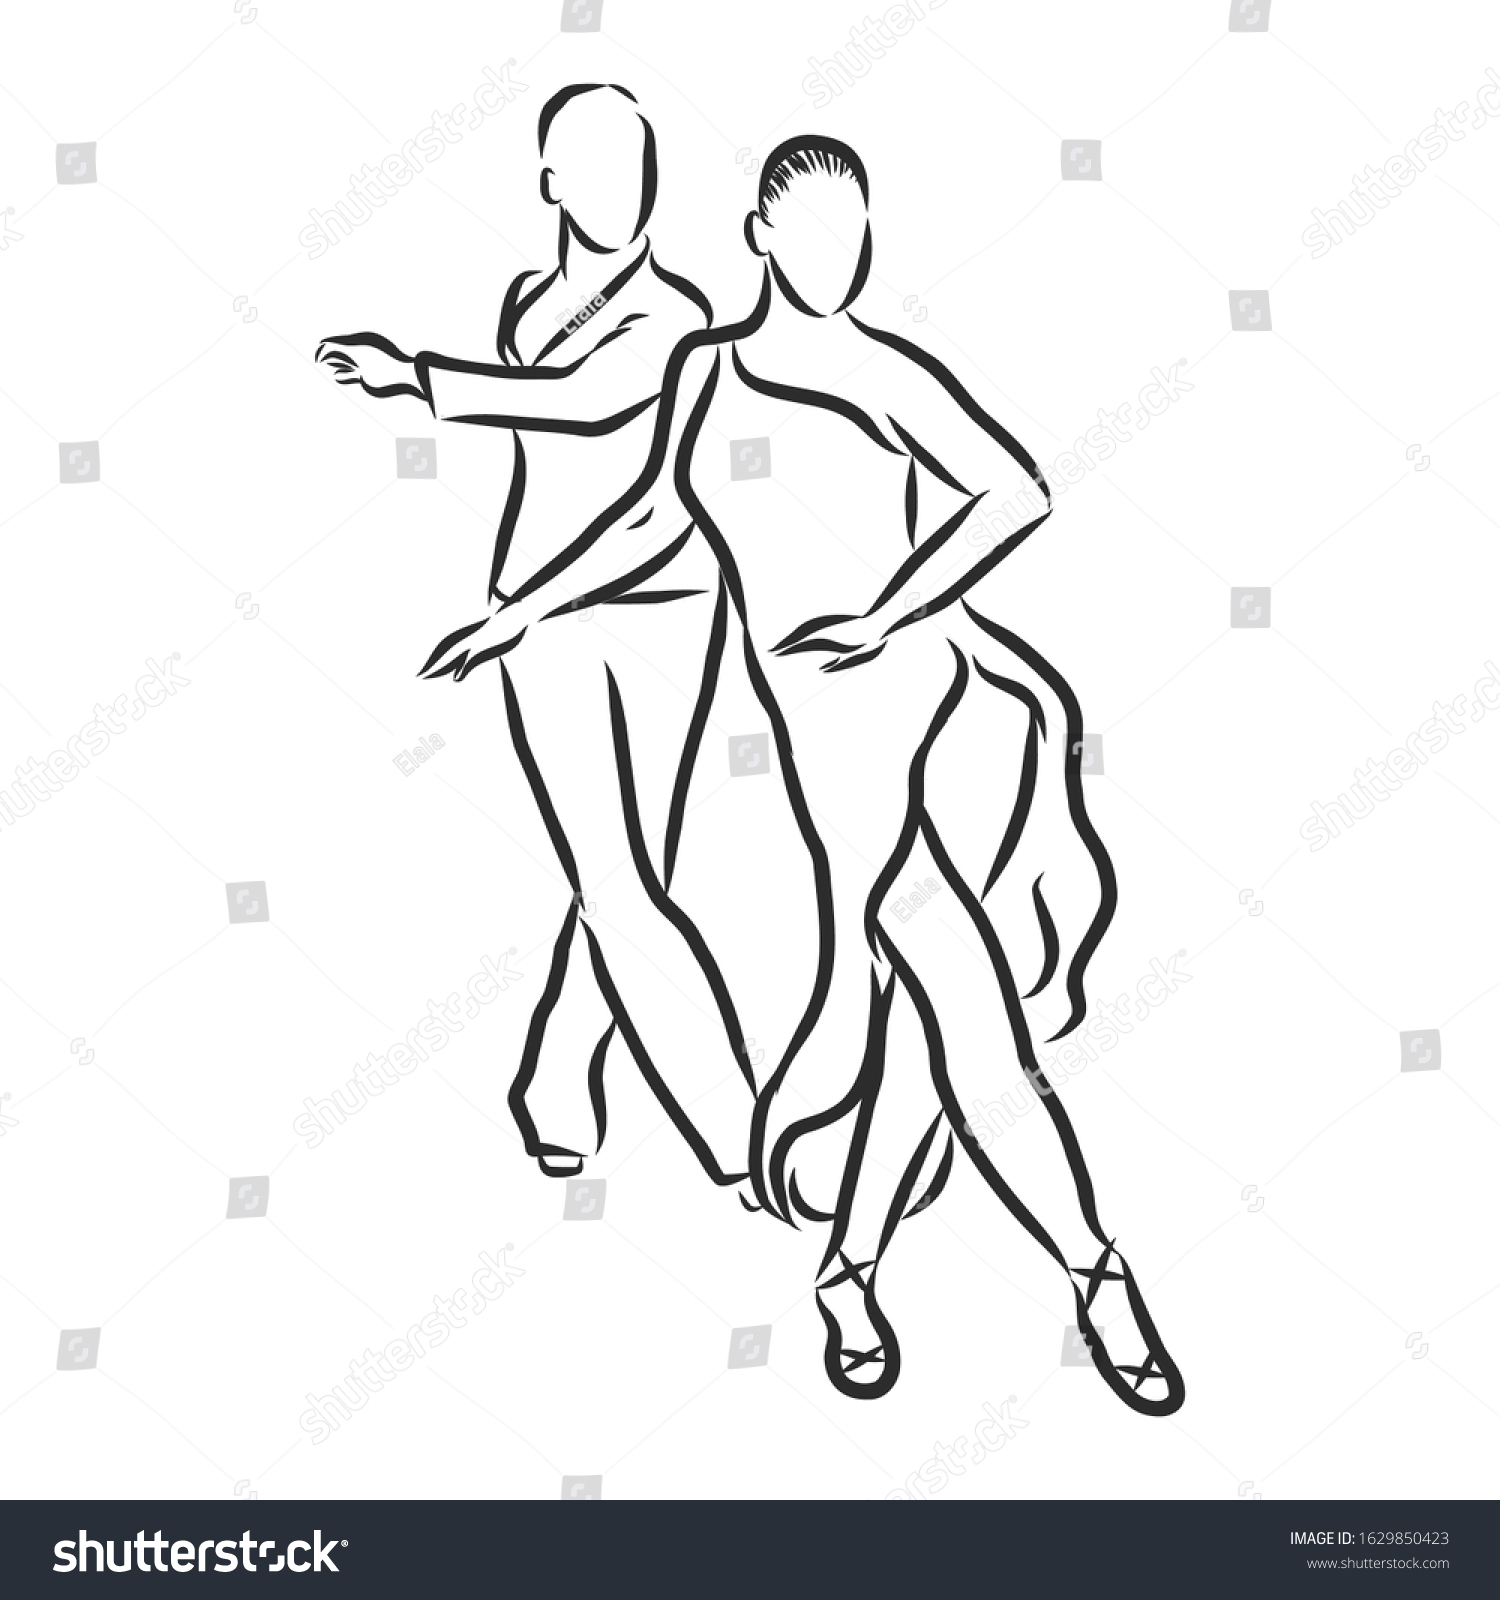 Couple Latin Dancers Vector Sketch Illustration Stock Vector (Royalty ...